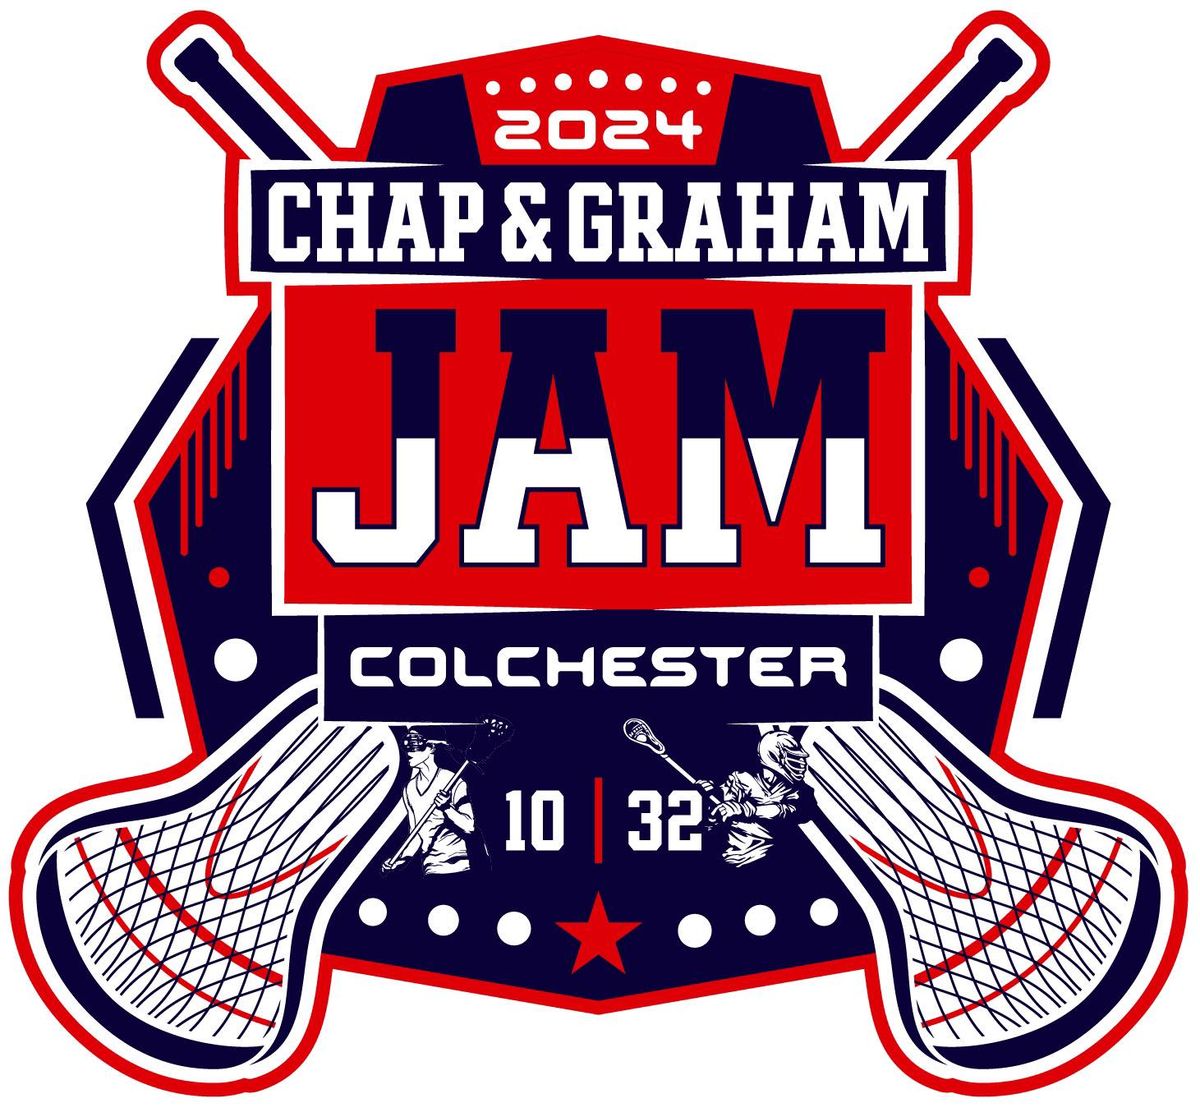 Chap & Graham Jam